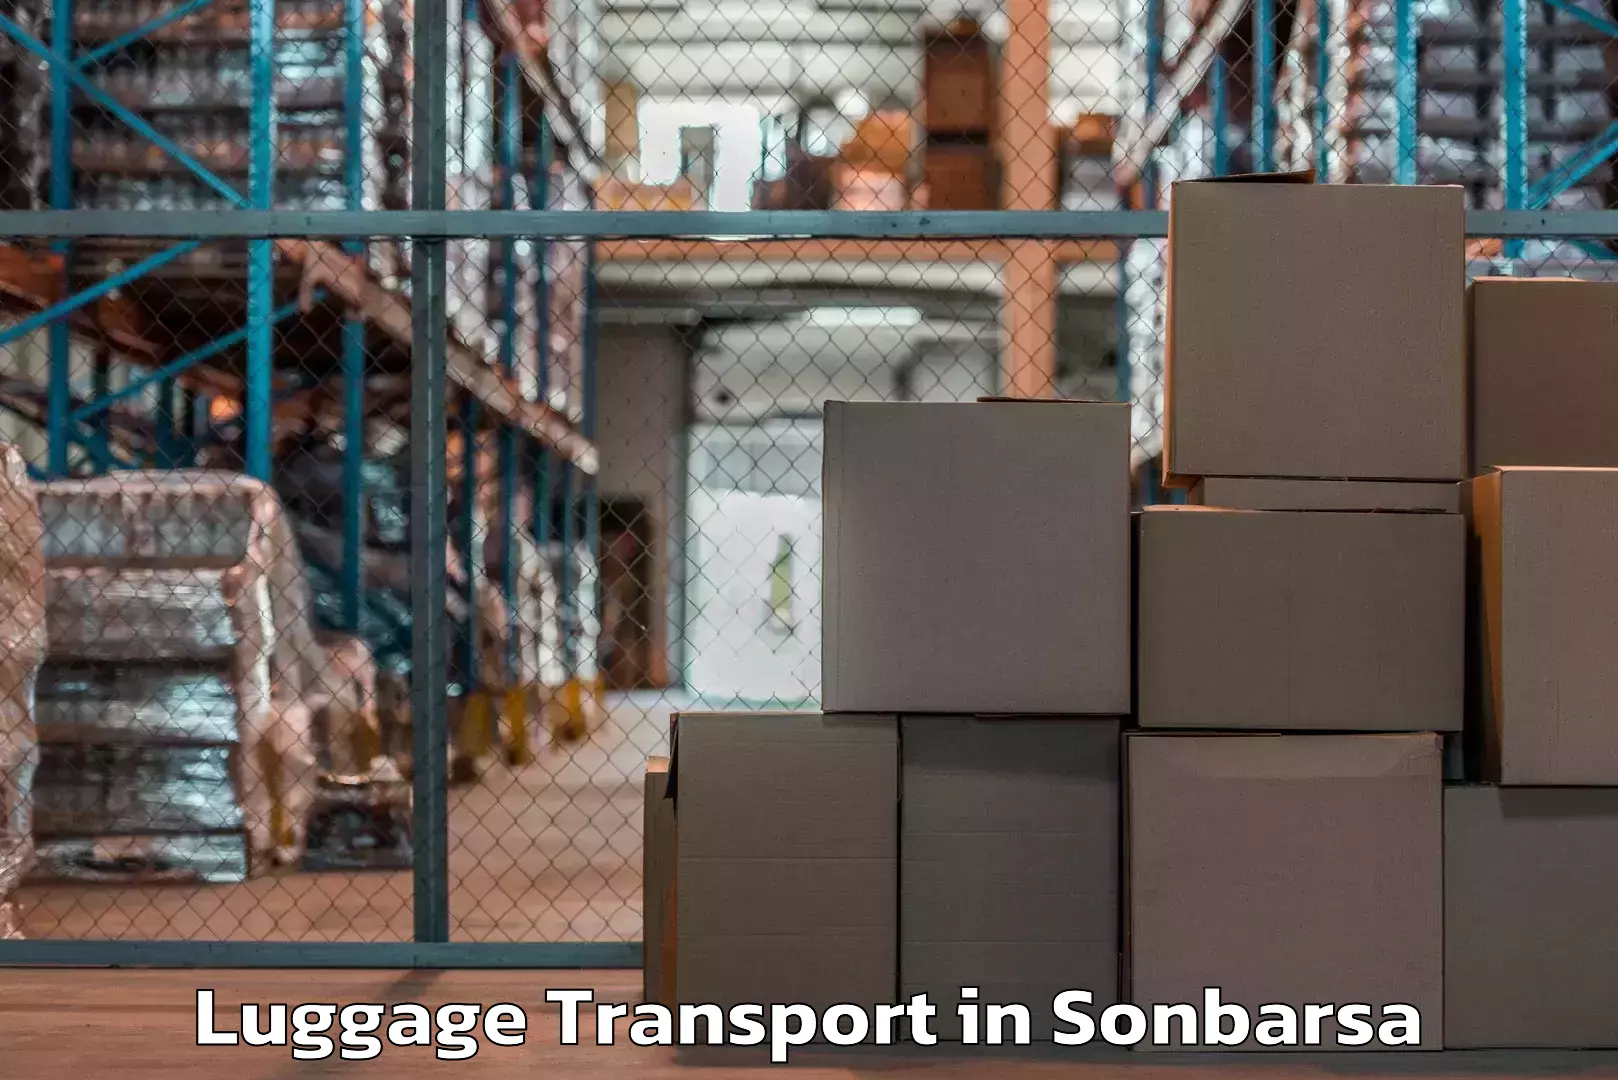 Baggage relocation service in Sonbarsa